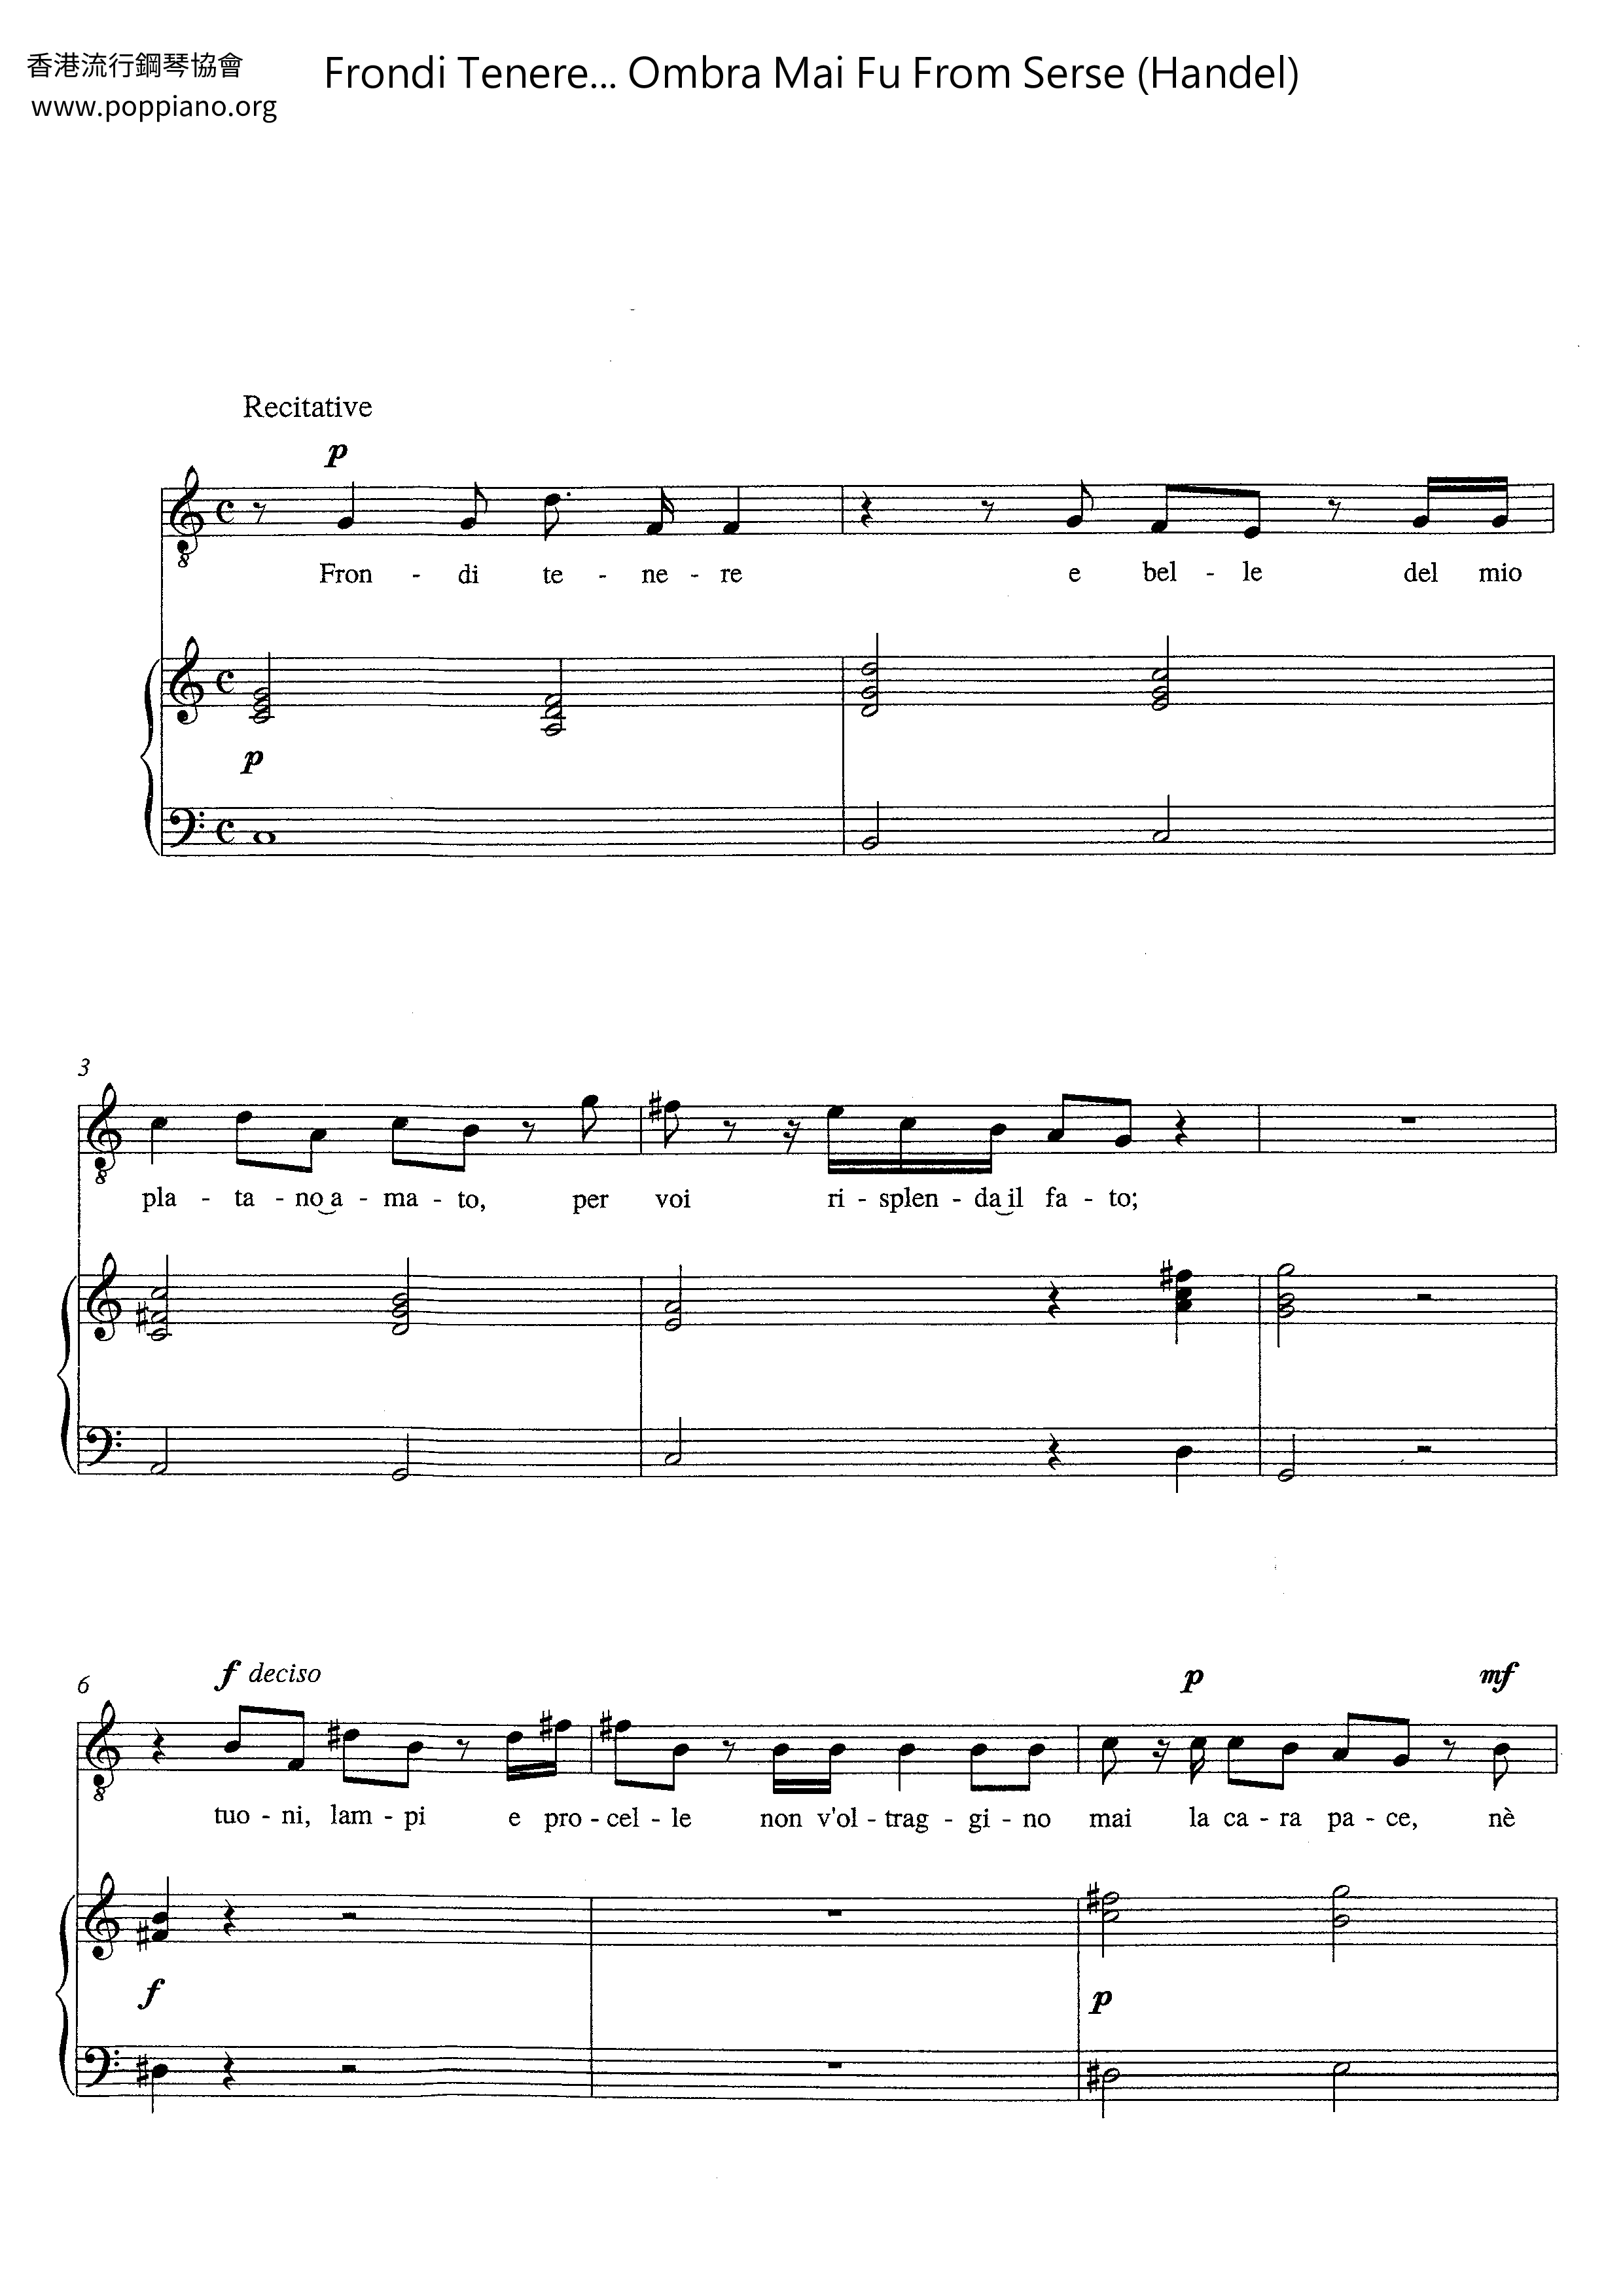 Frondi Tenere... Ombra Mai Fu From Serse (Handel)ピアノ譜